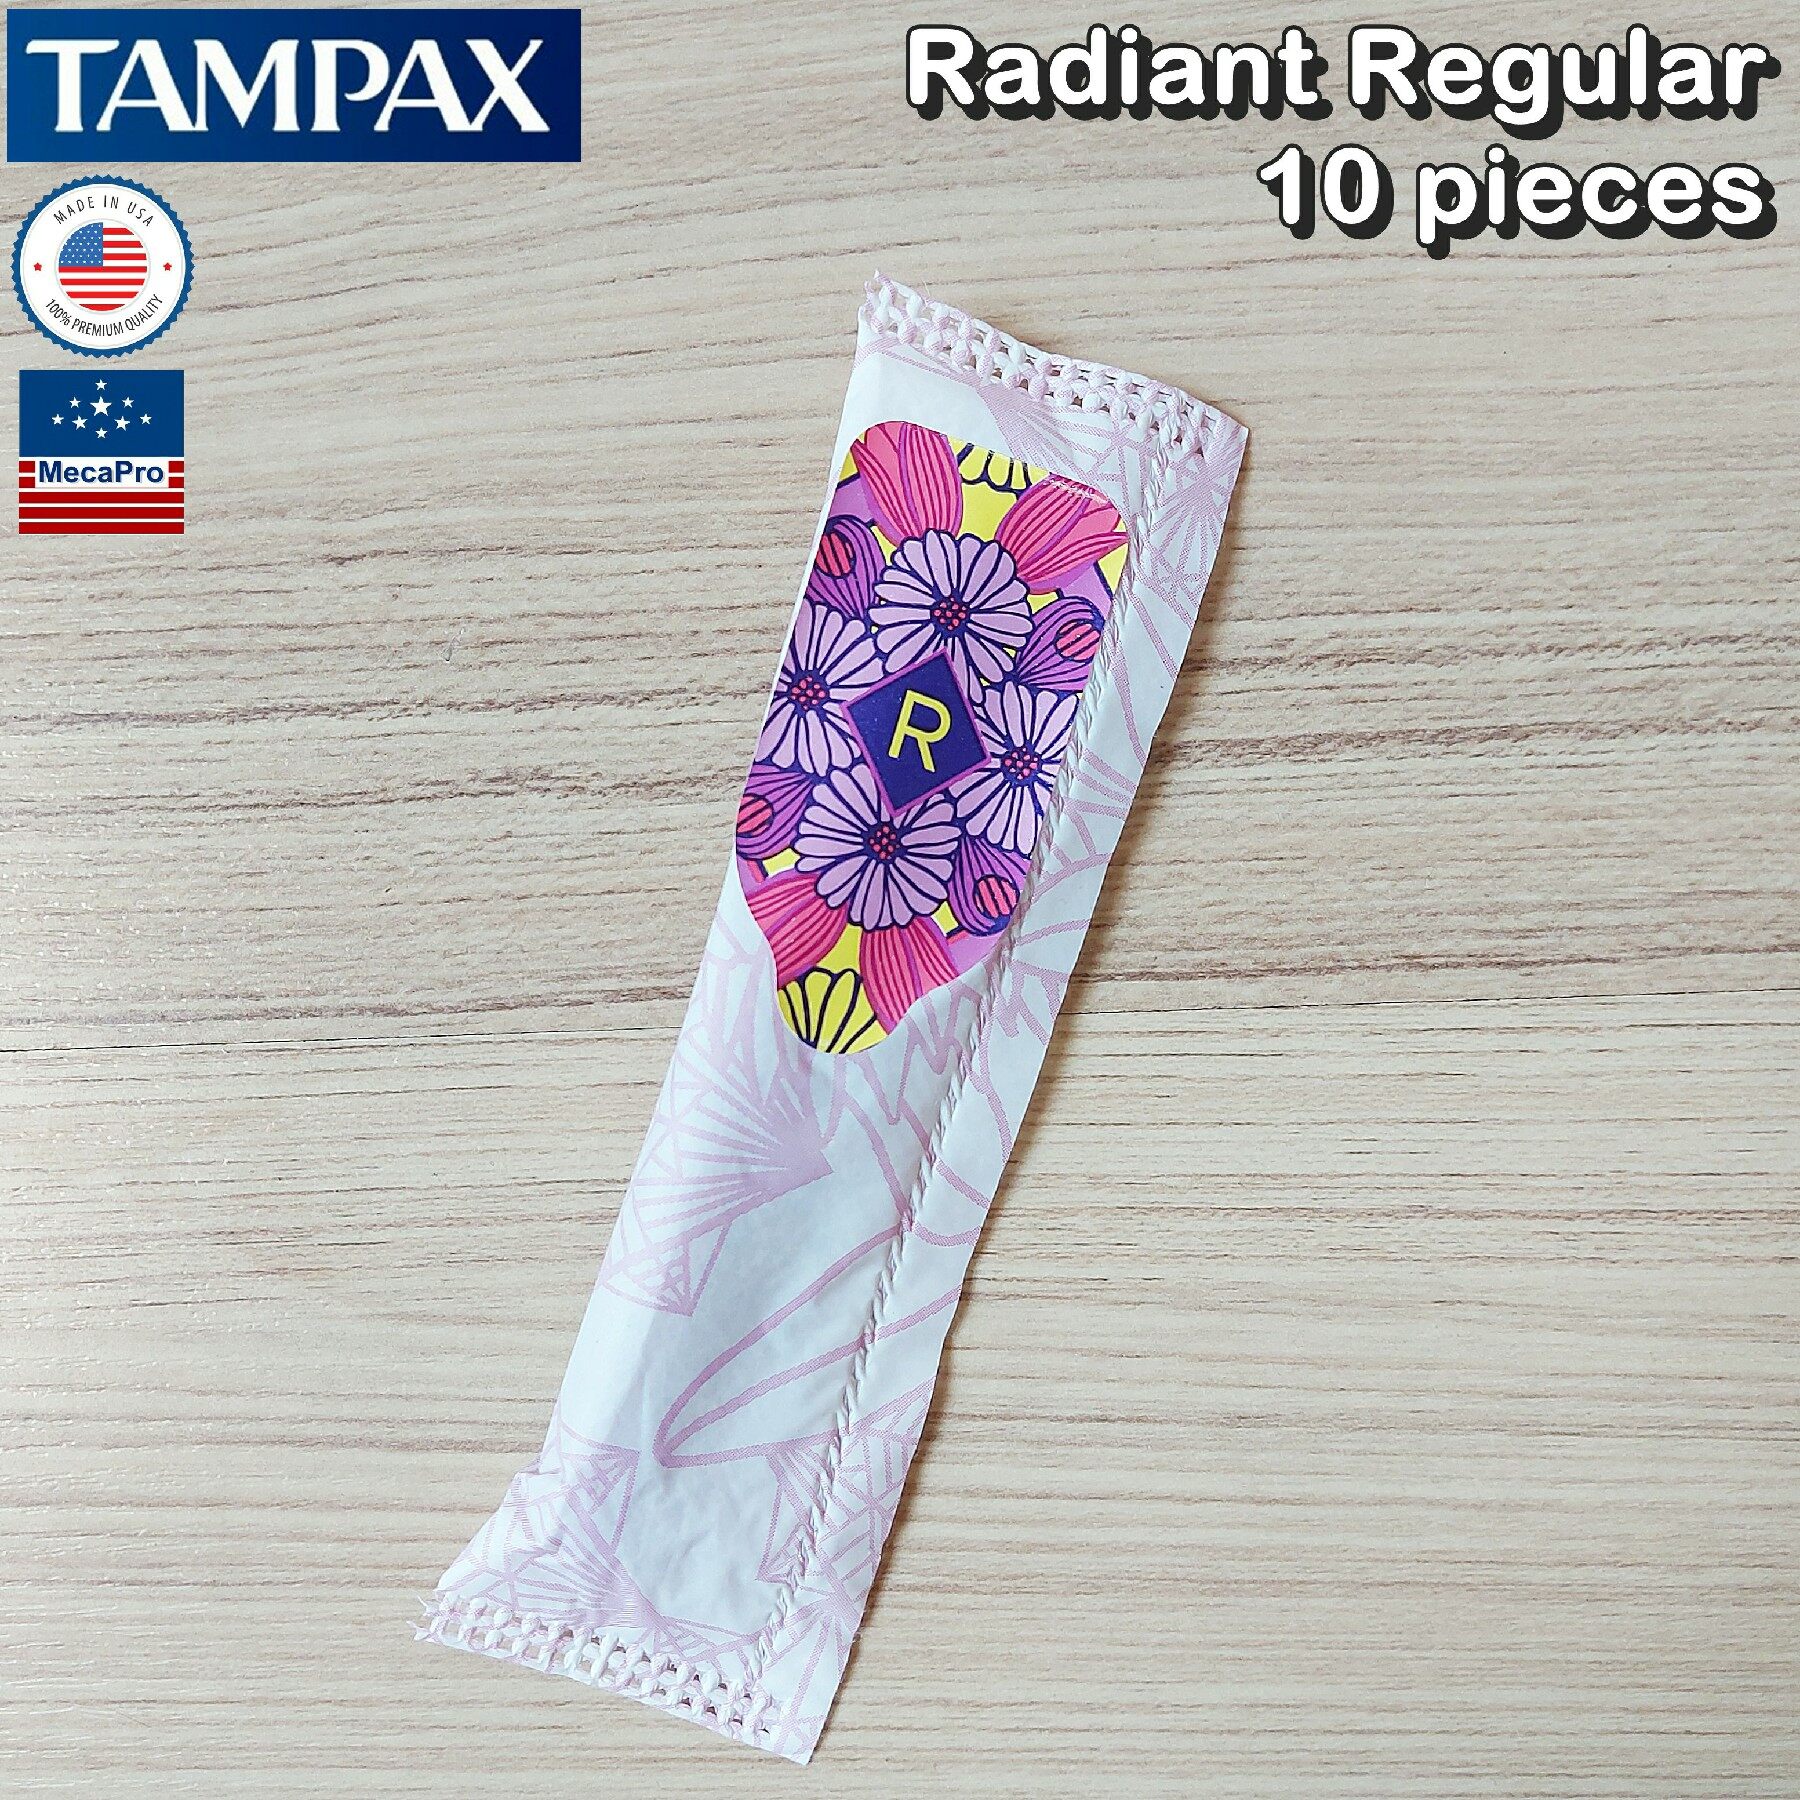 Tampax® Radiant Regular Absorbency Tampons Unscented 10 pieces ผ้าอนามัยแบบสอด 10 ชิ้น เหมาะกับวันมาปกติ ไร้กลิ่น